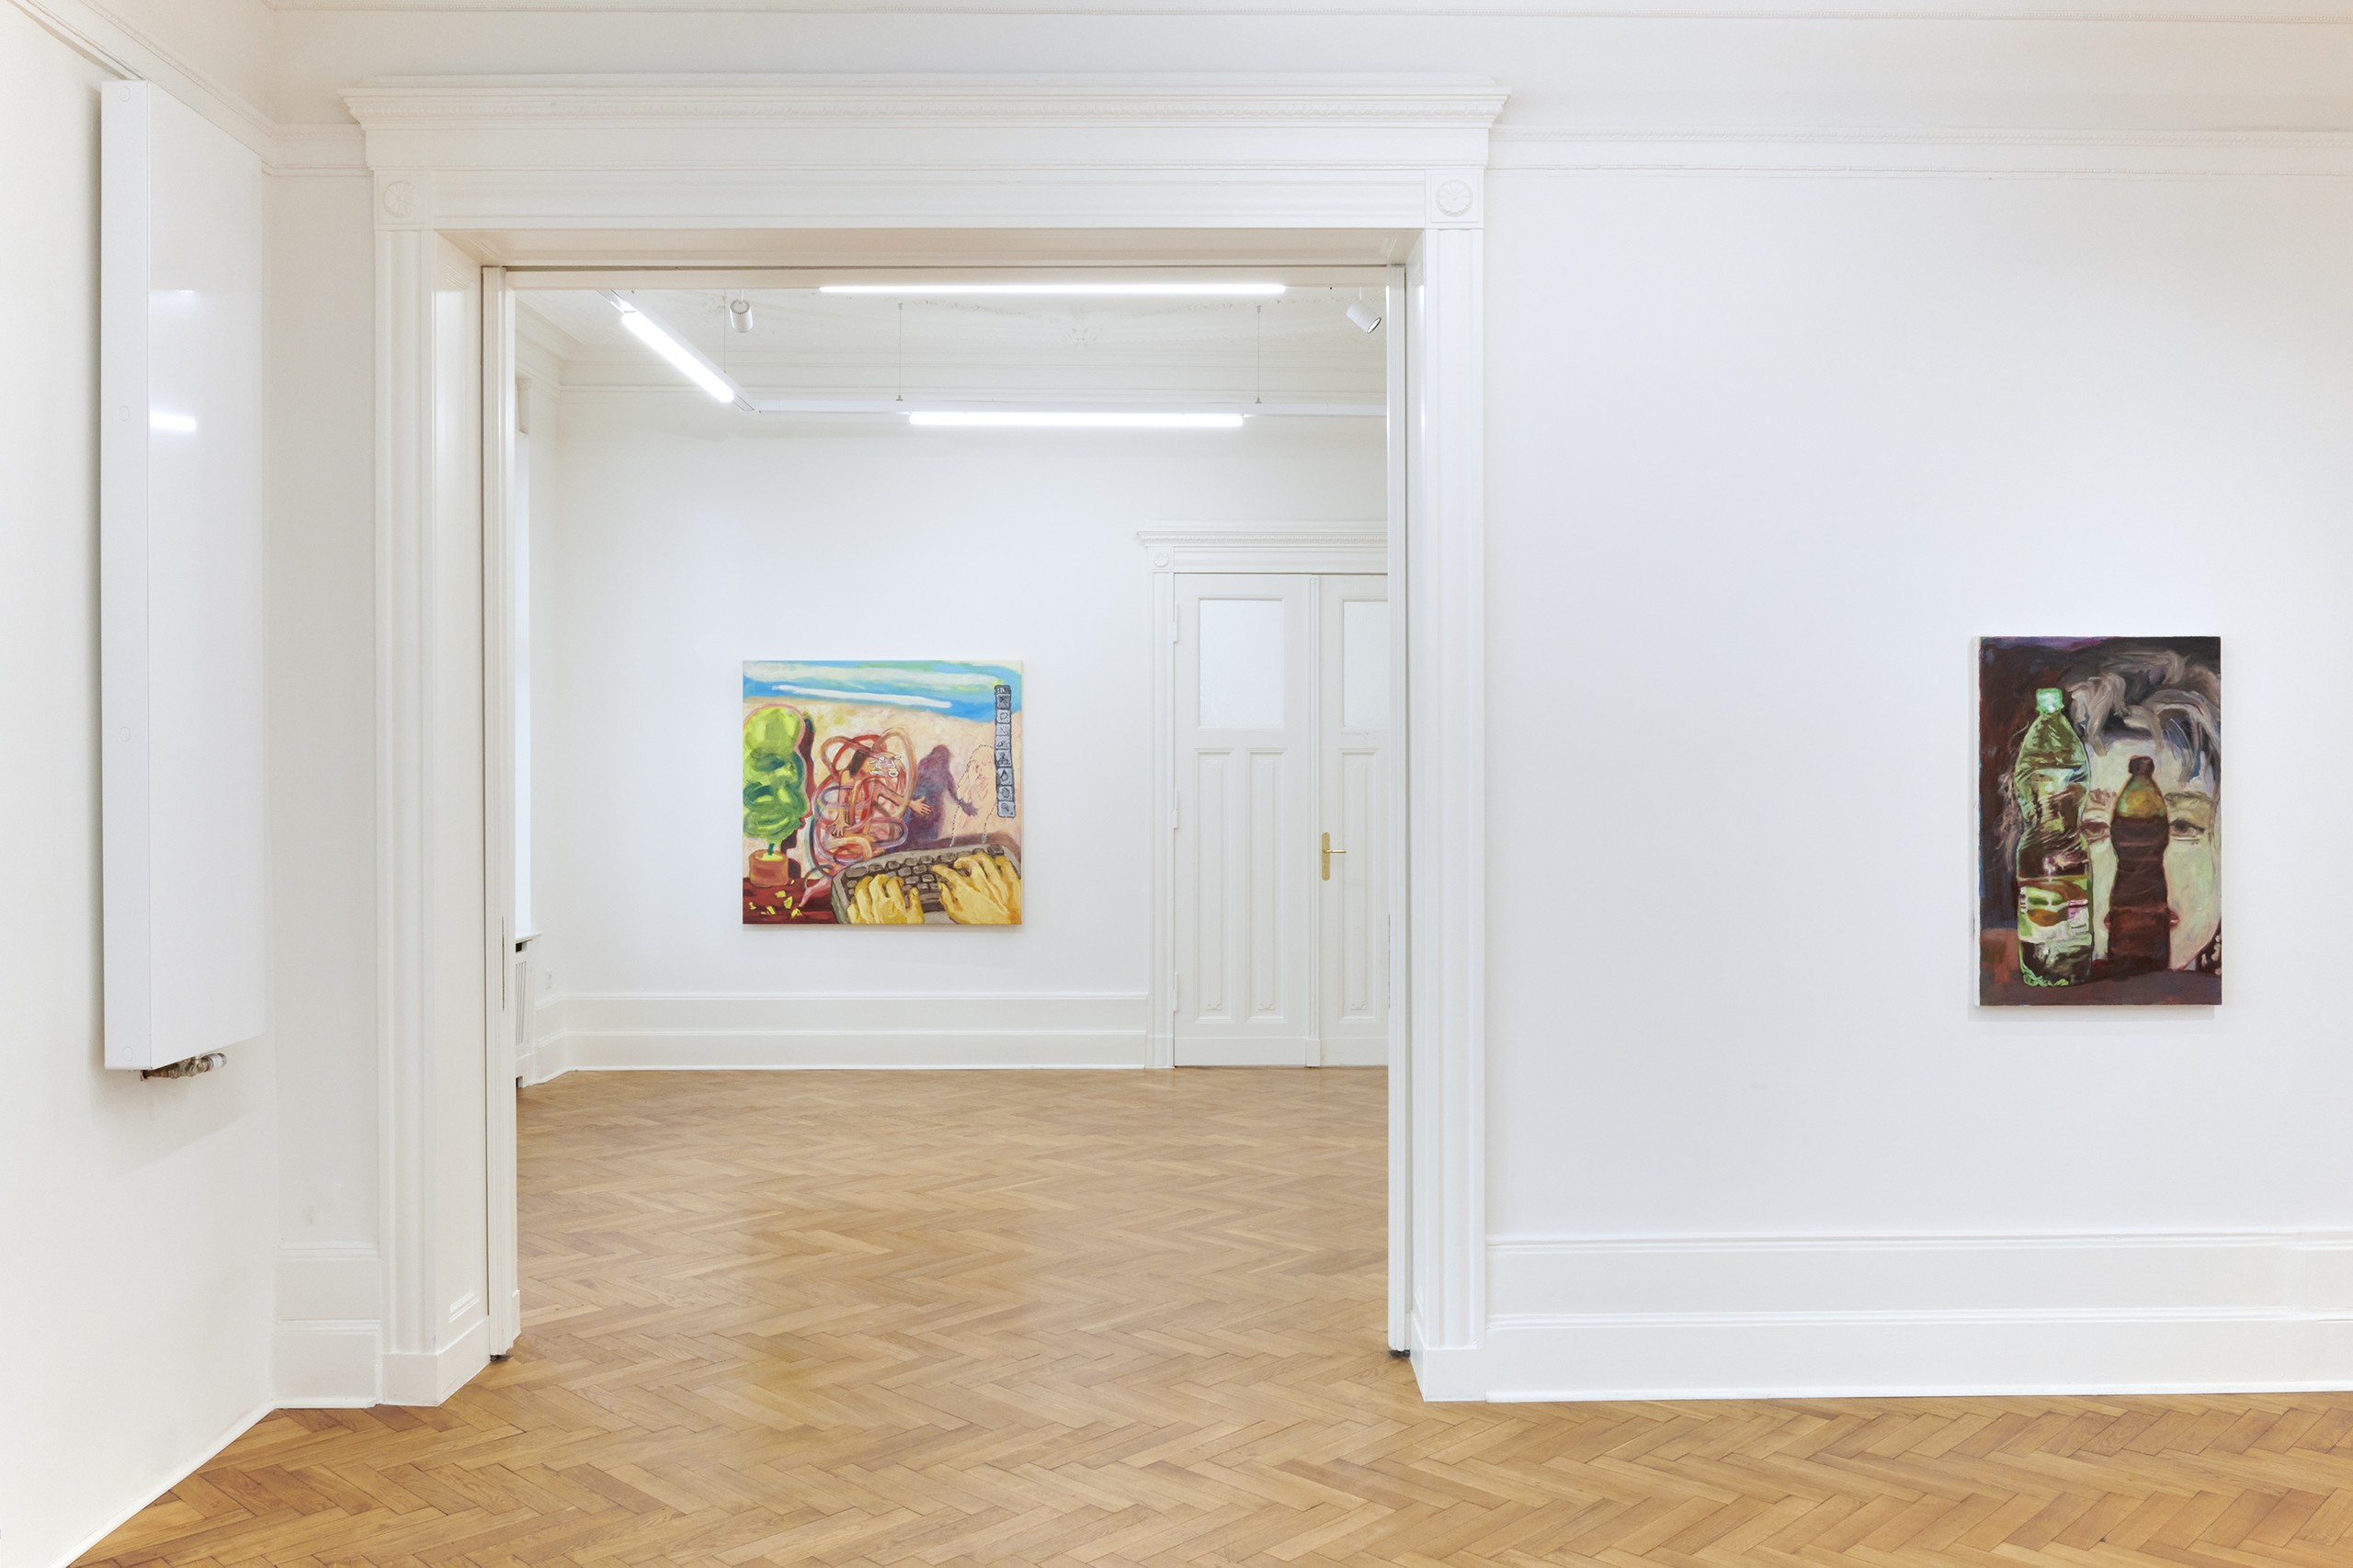 Installation view, Hive Mind, Société, Berlin, 2021